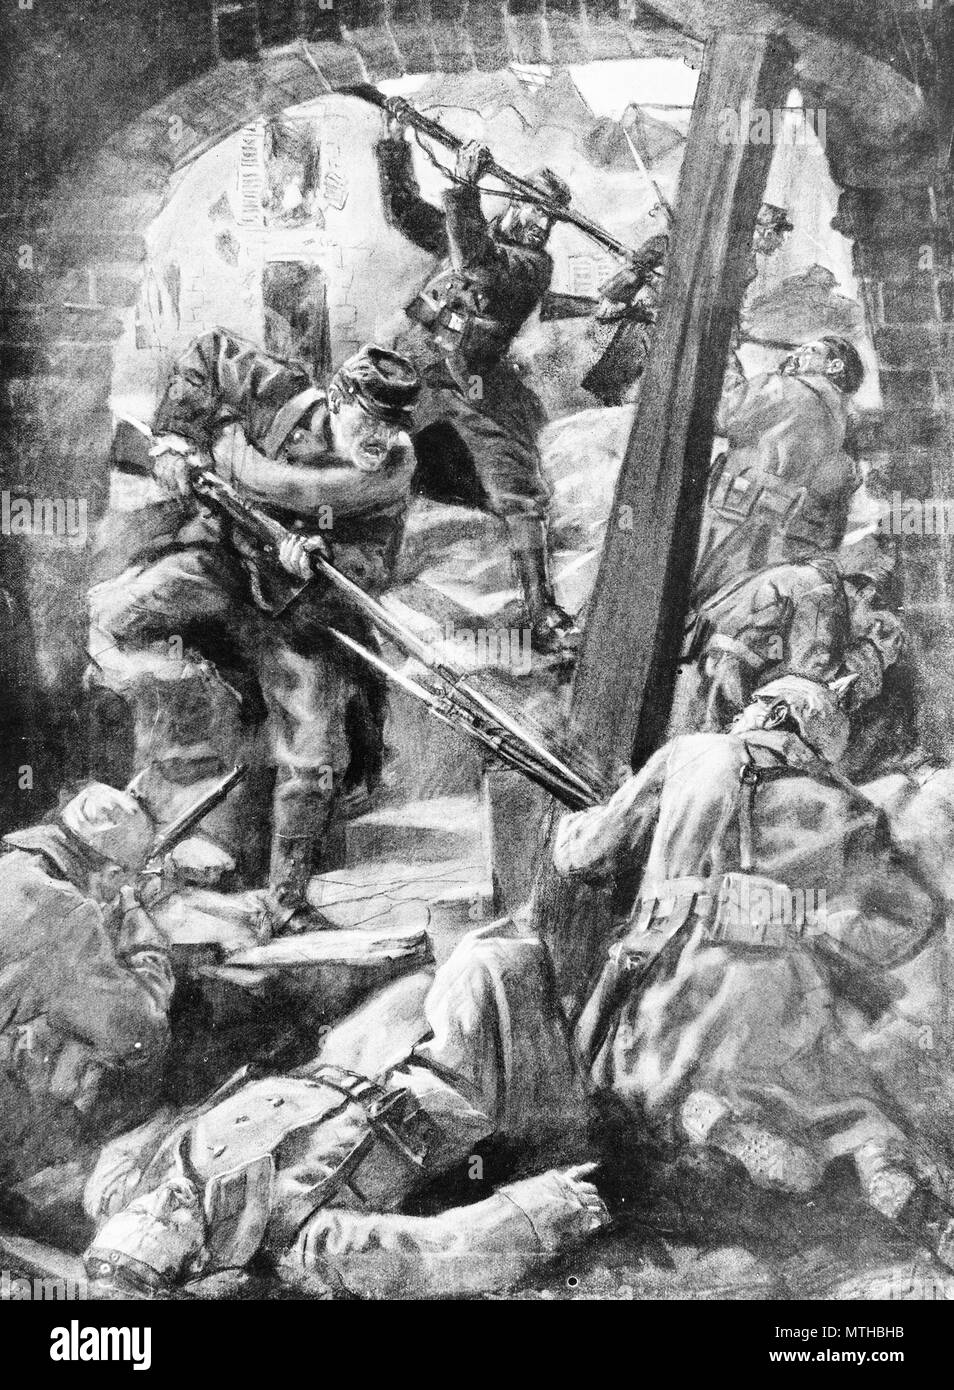 Bayonet battle in 1915, France Stock Photo